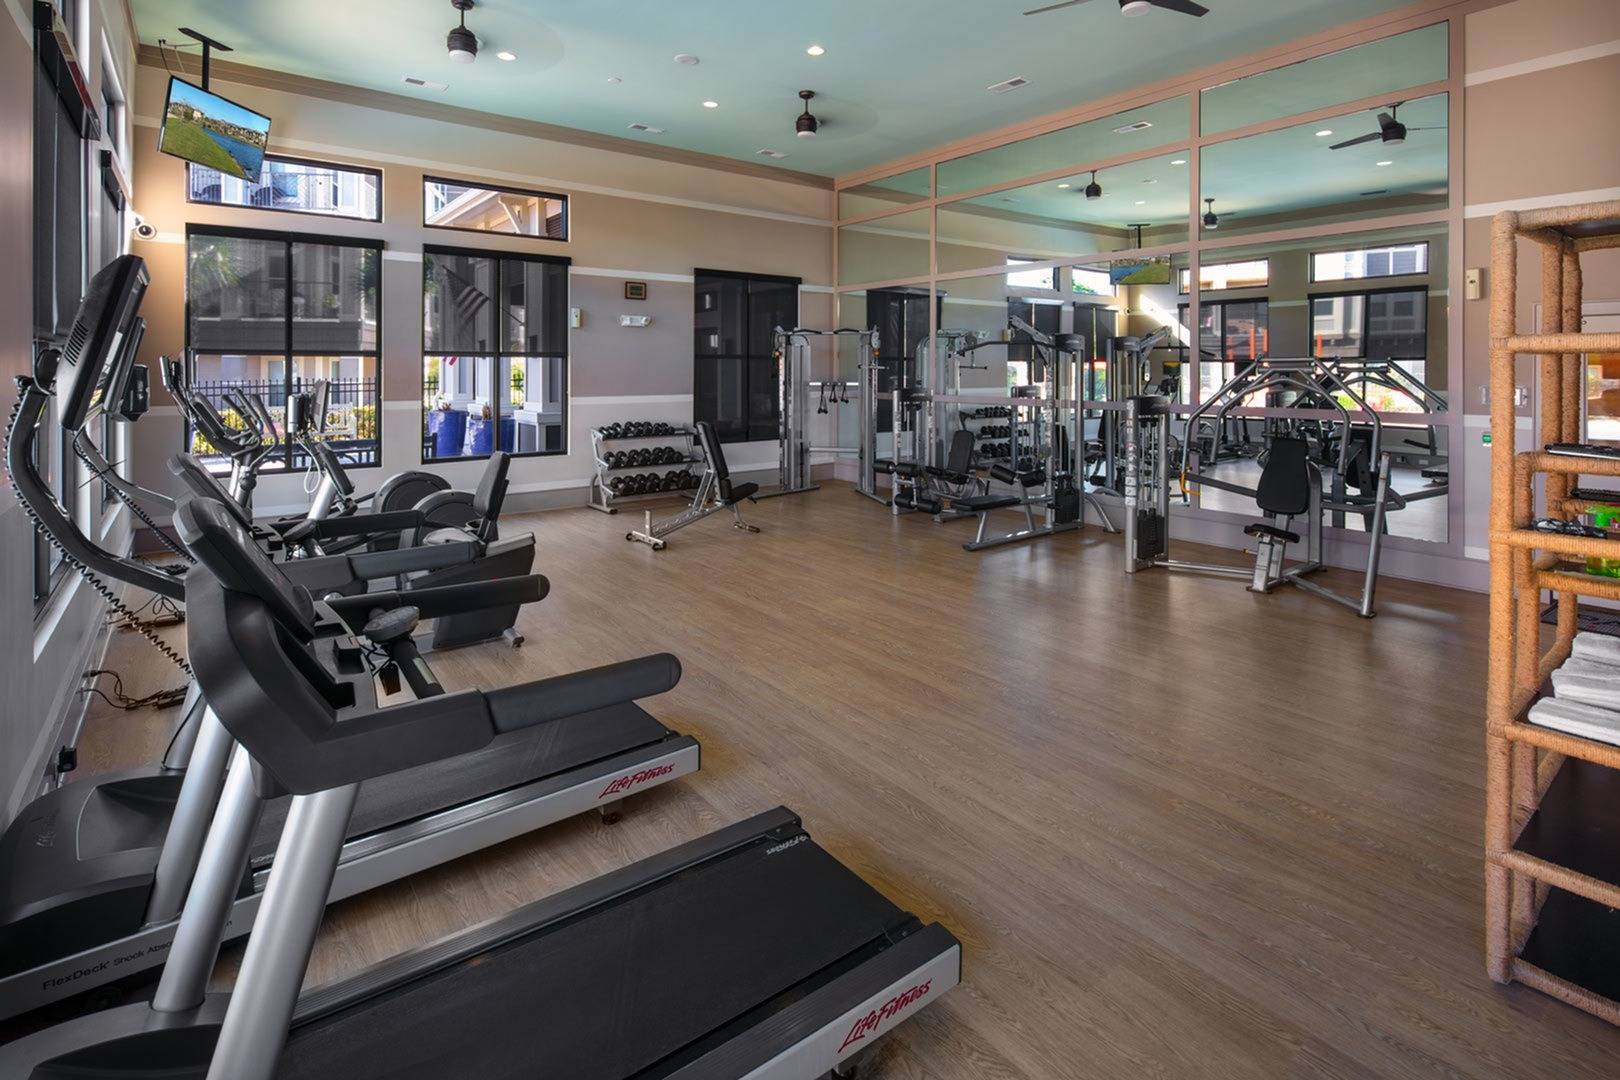 Fitness Center | Apartments for rent in Jacksonville, FL | Sorrel